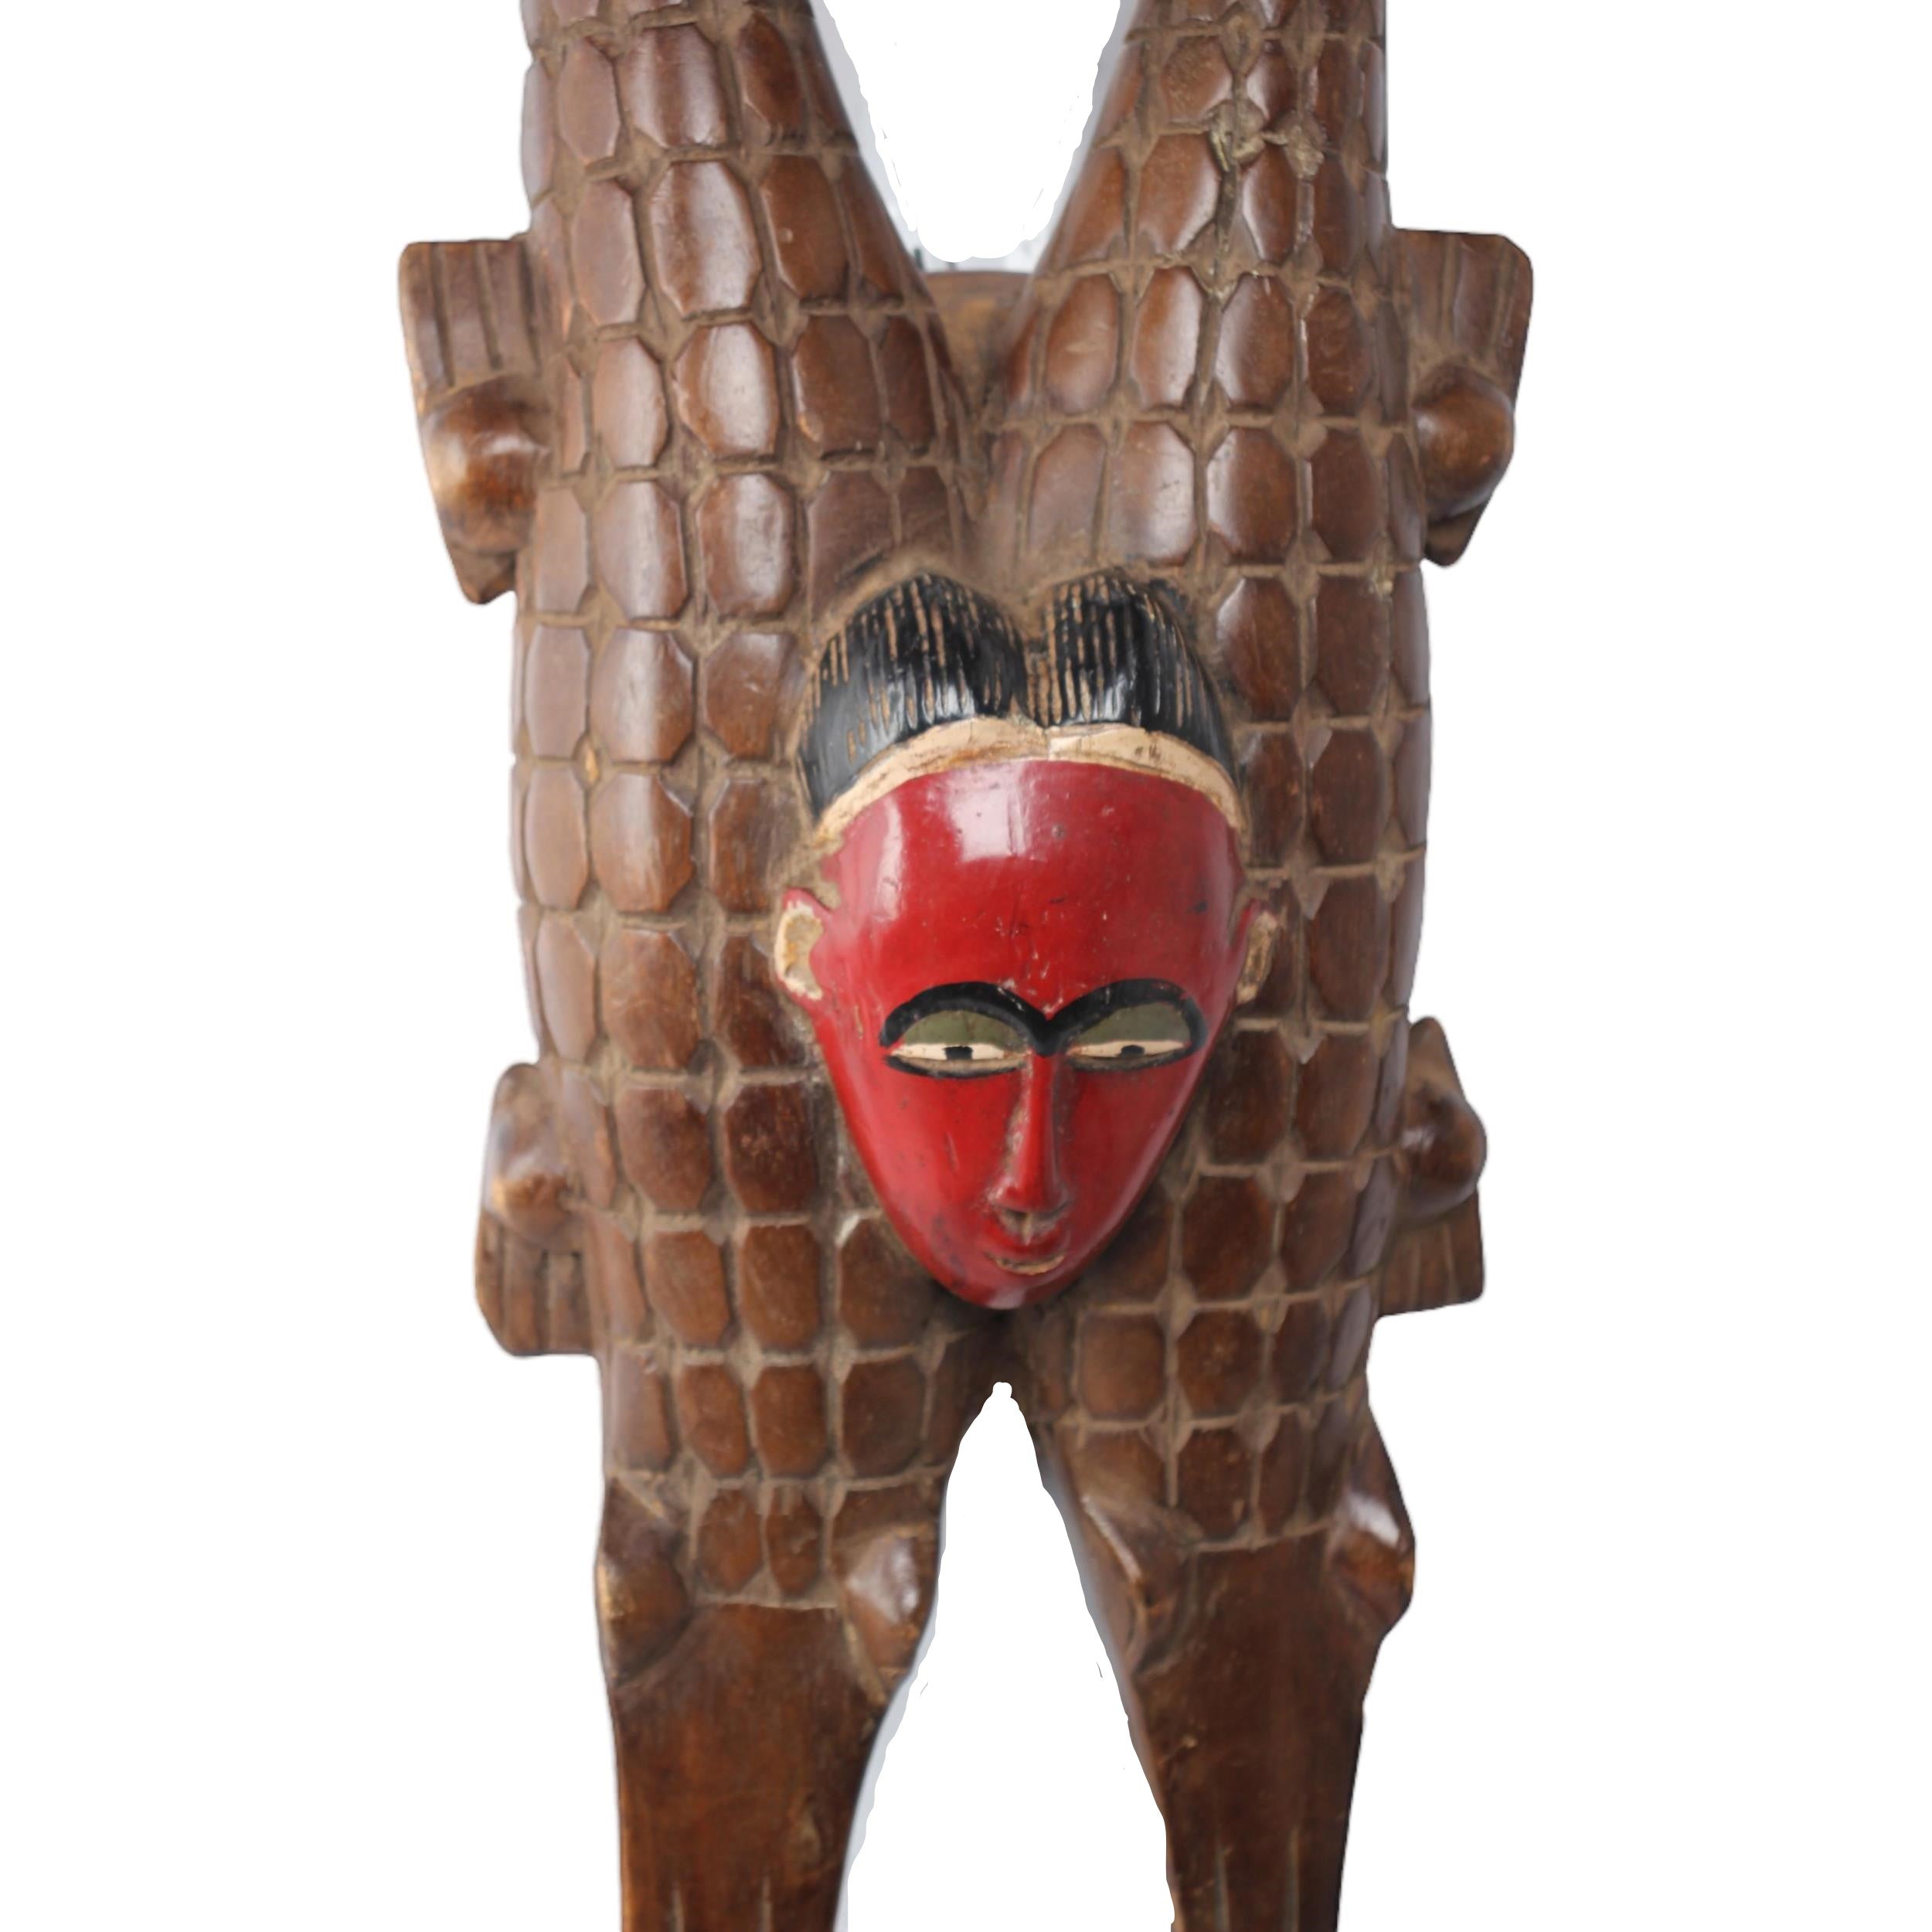 Guro Tribe Mask ~20.9" Tall